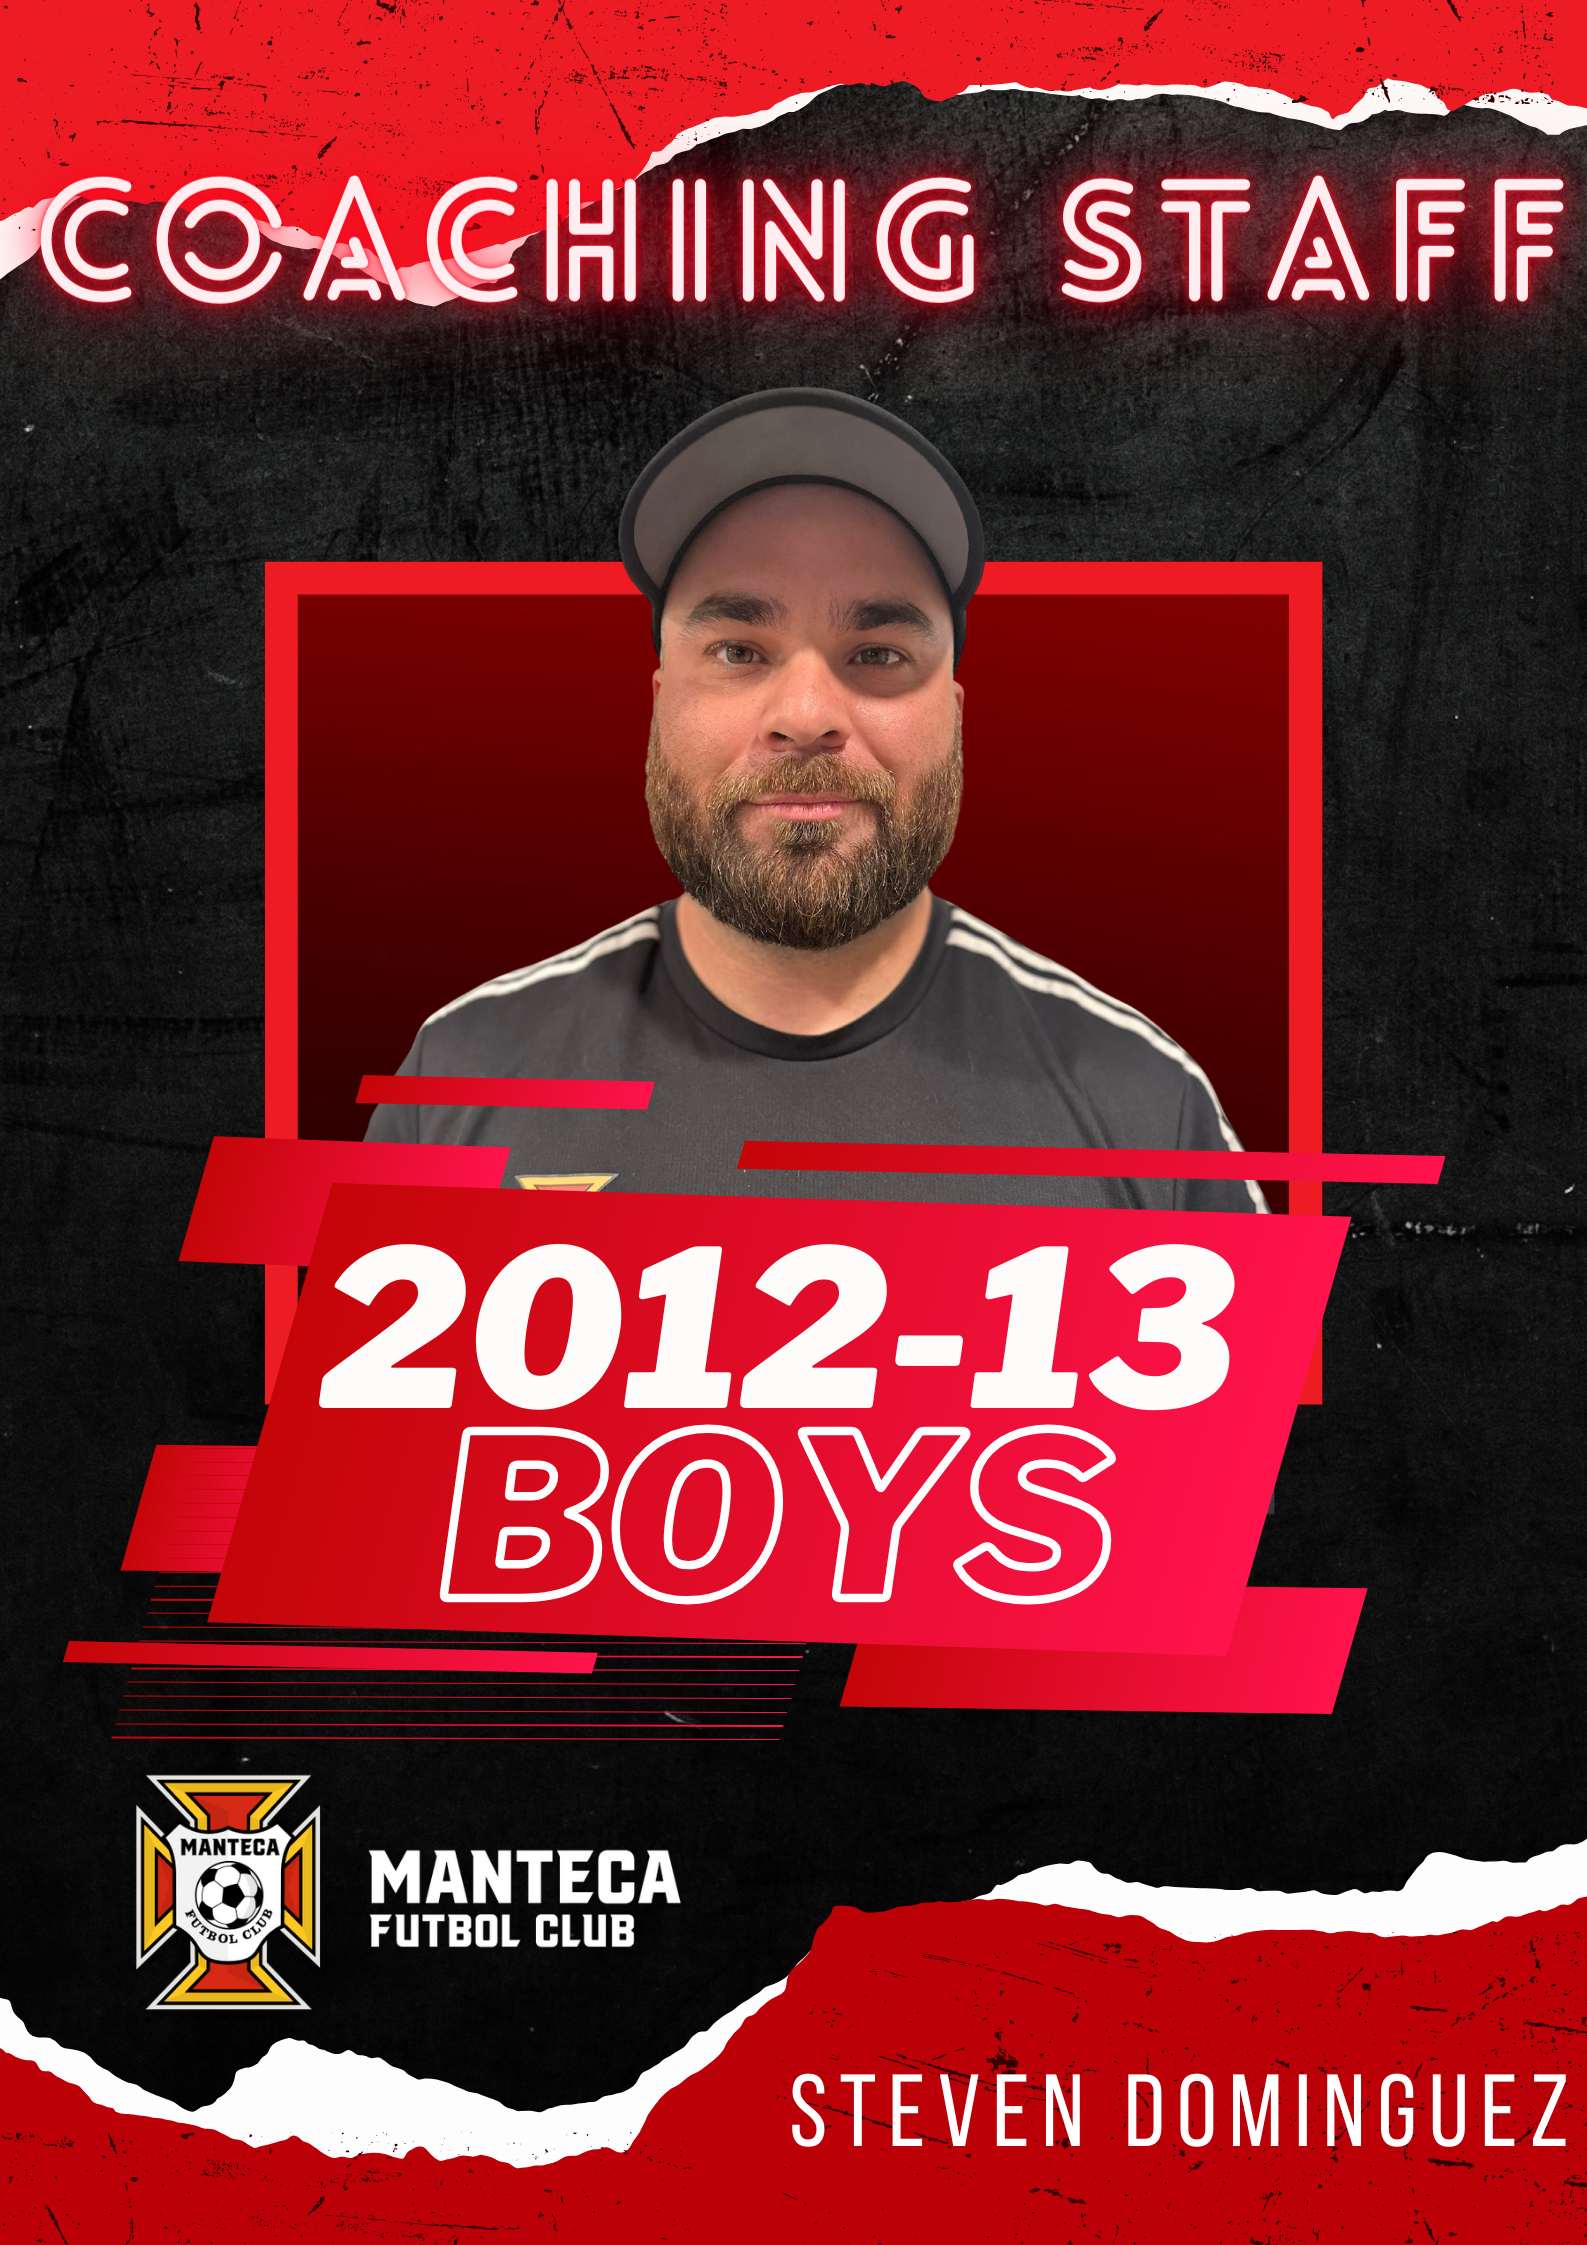 Manteca Futbol Club 12/13 Boys